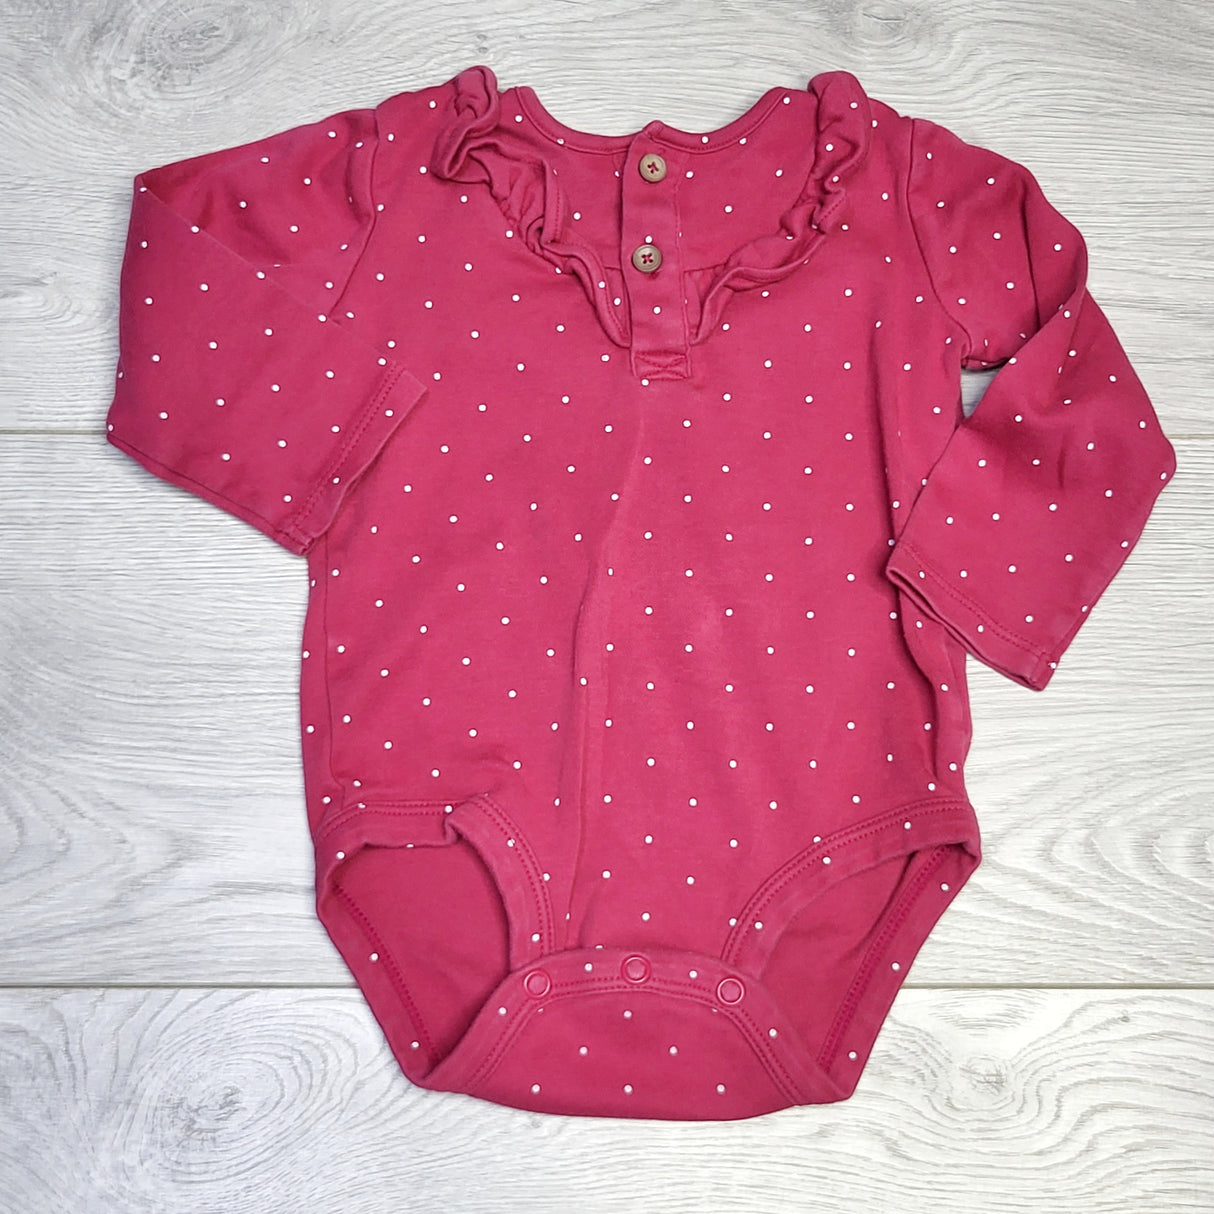 KJHN1 - Child of Mine pink polka dot bodysuit. Size 12 months